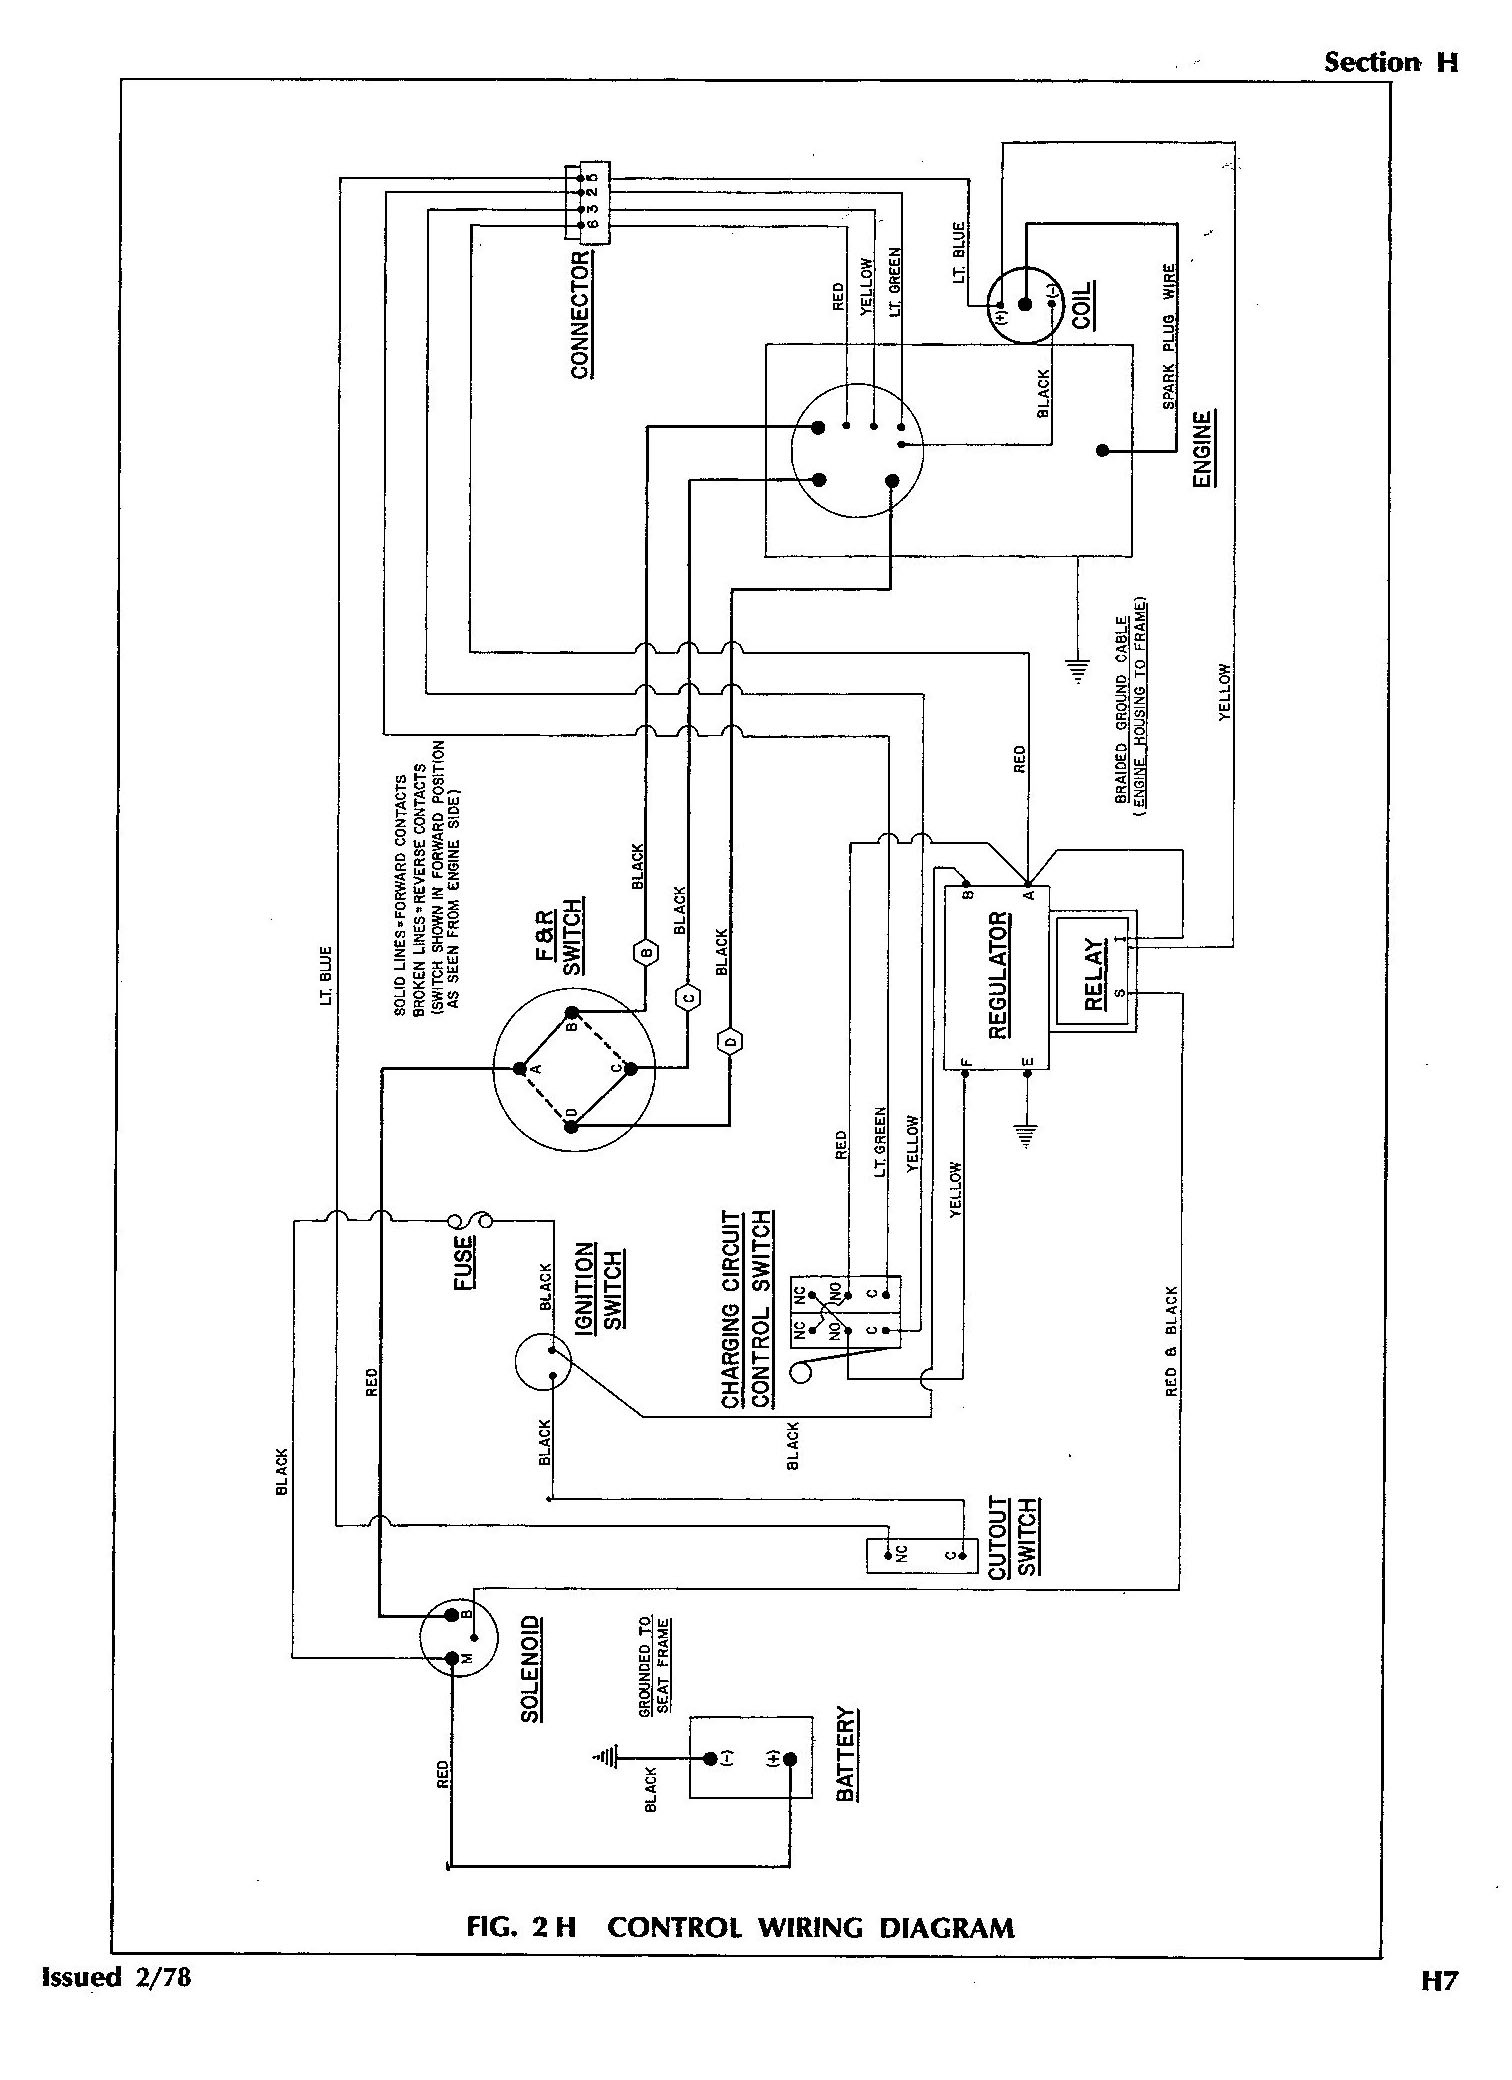 1991 Gas Club Car Schematic Diagram - Today Wiring Diagram - Club Car Wiring Diagram Gas